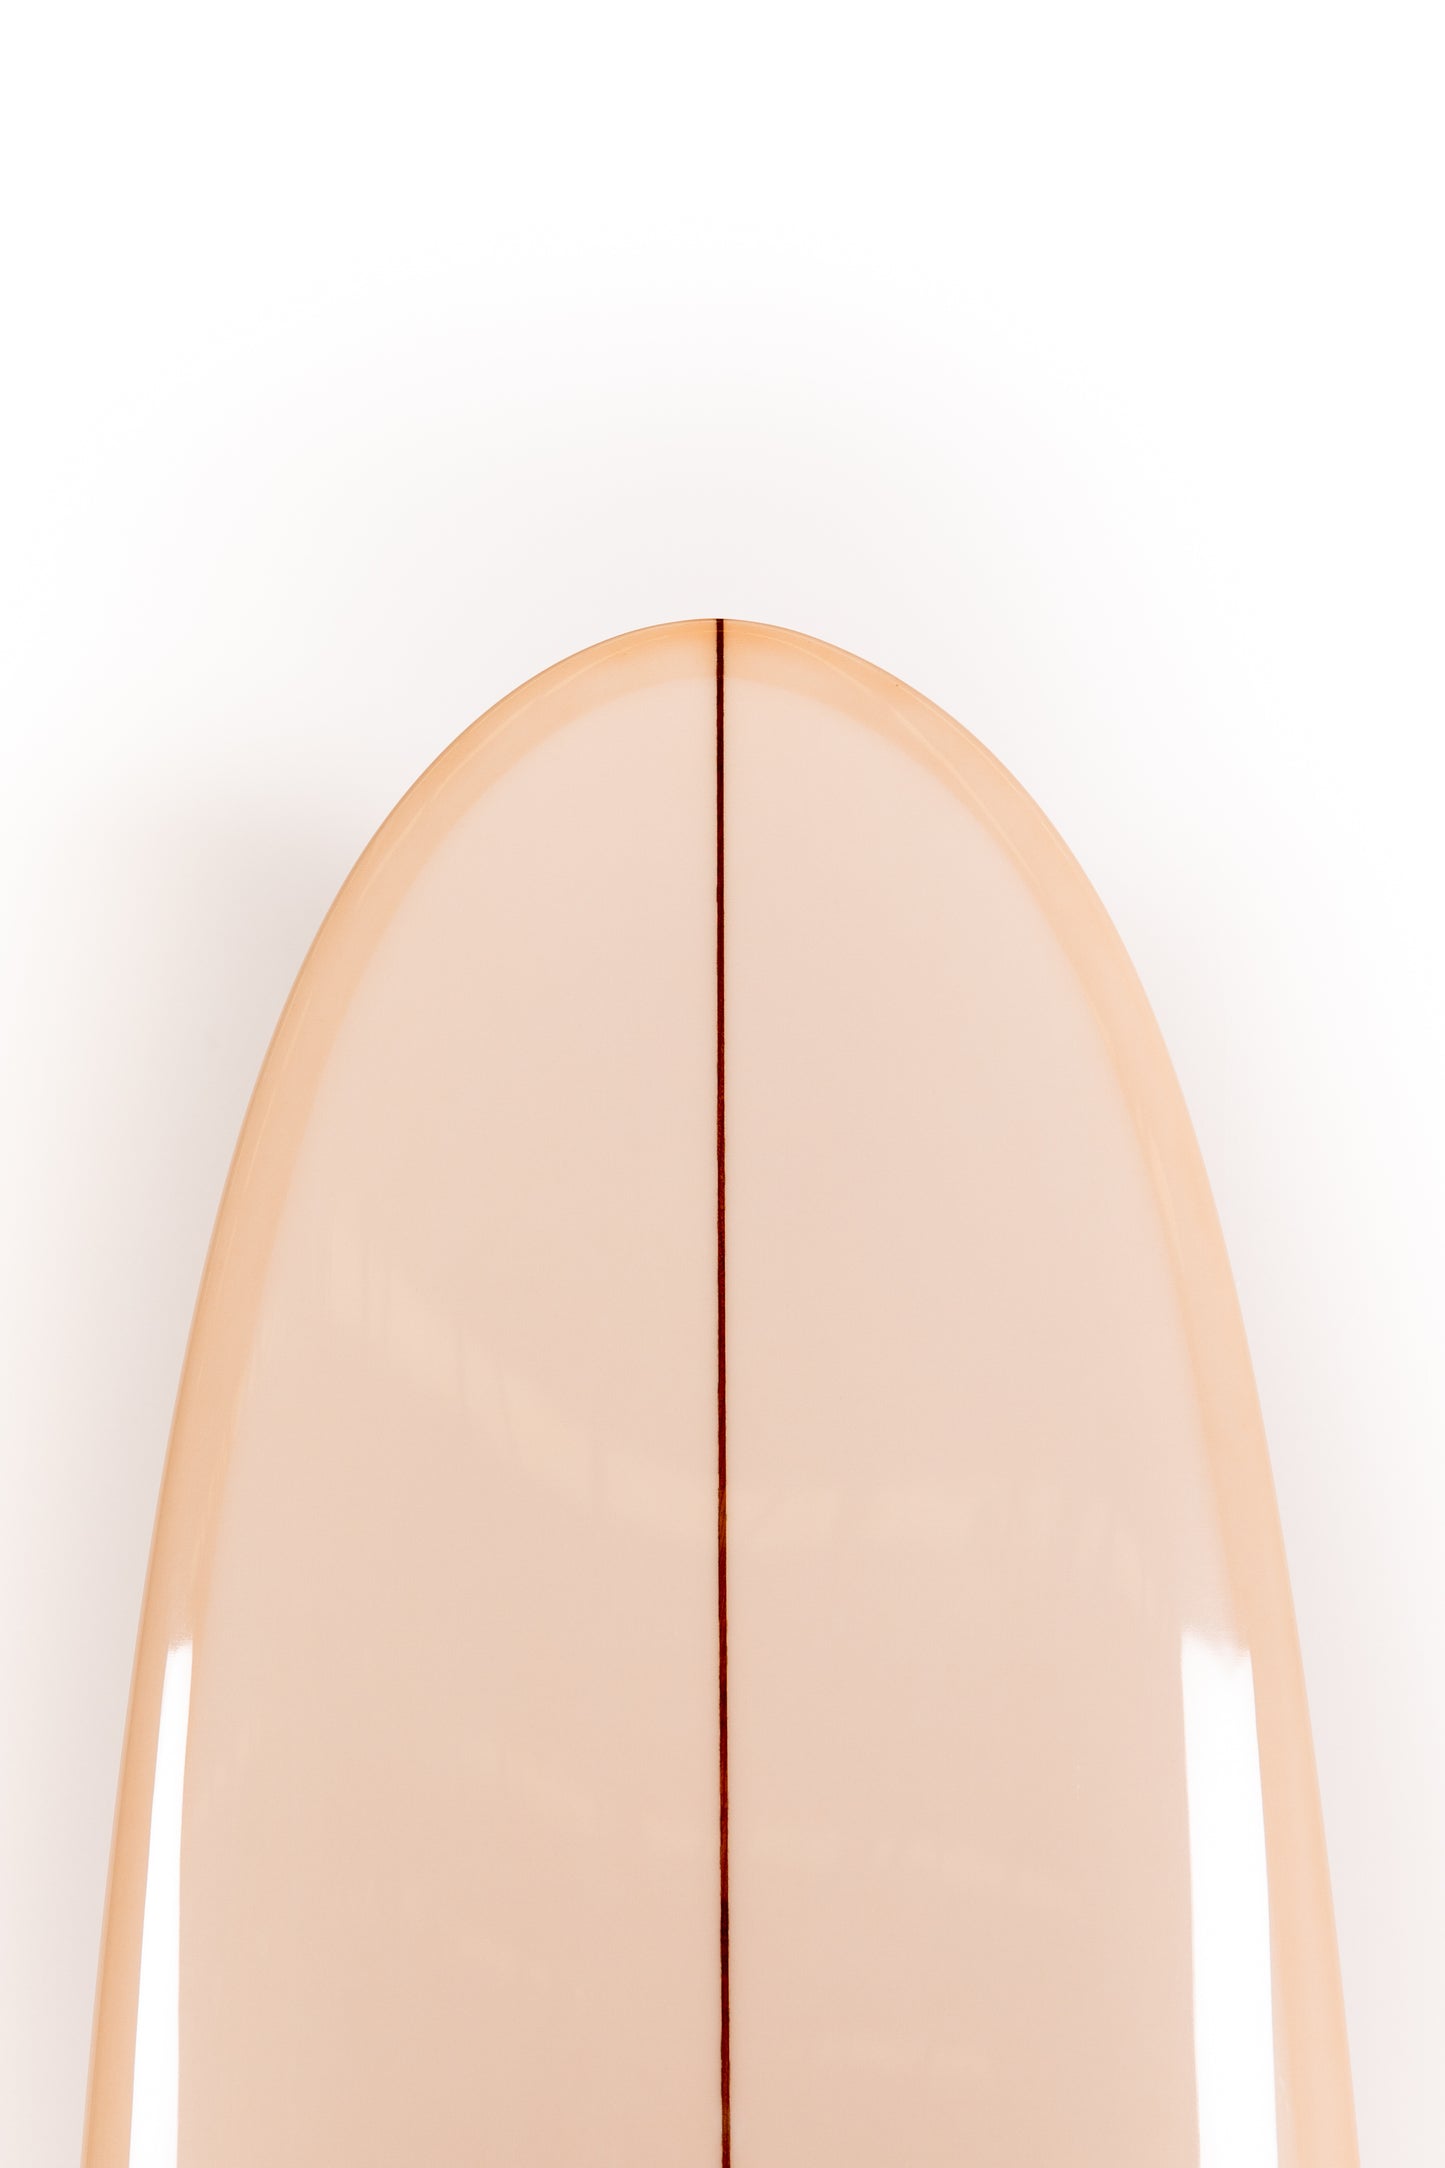 
                  
                    Pukas-Surf-Shop-Fantastic-Acid-Surfboards-Rounded-Hull-6_10
                  
                